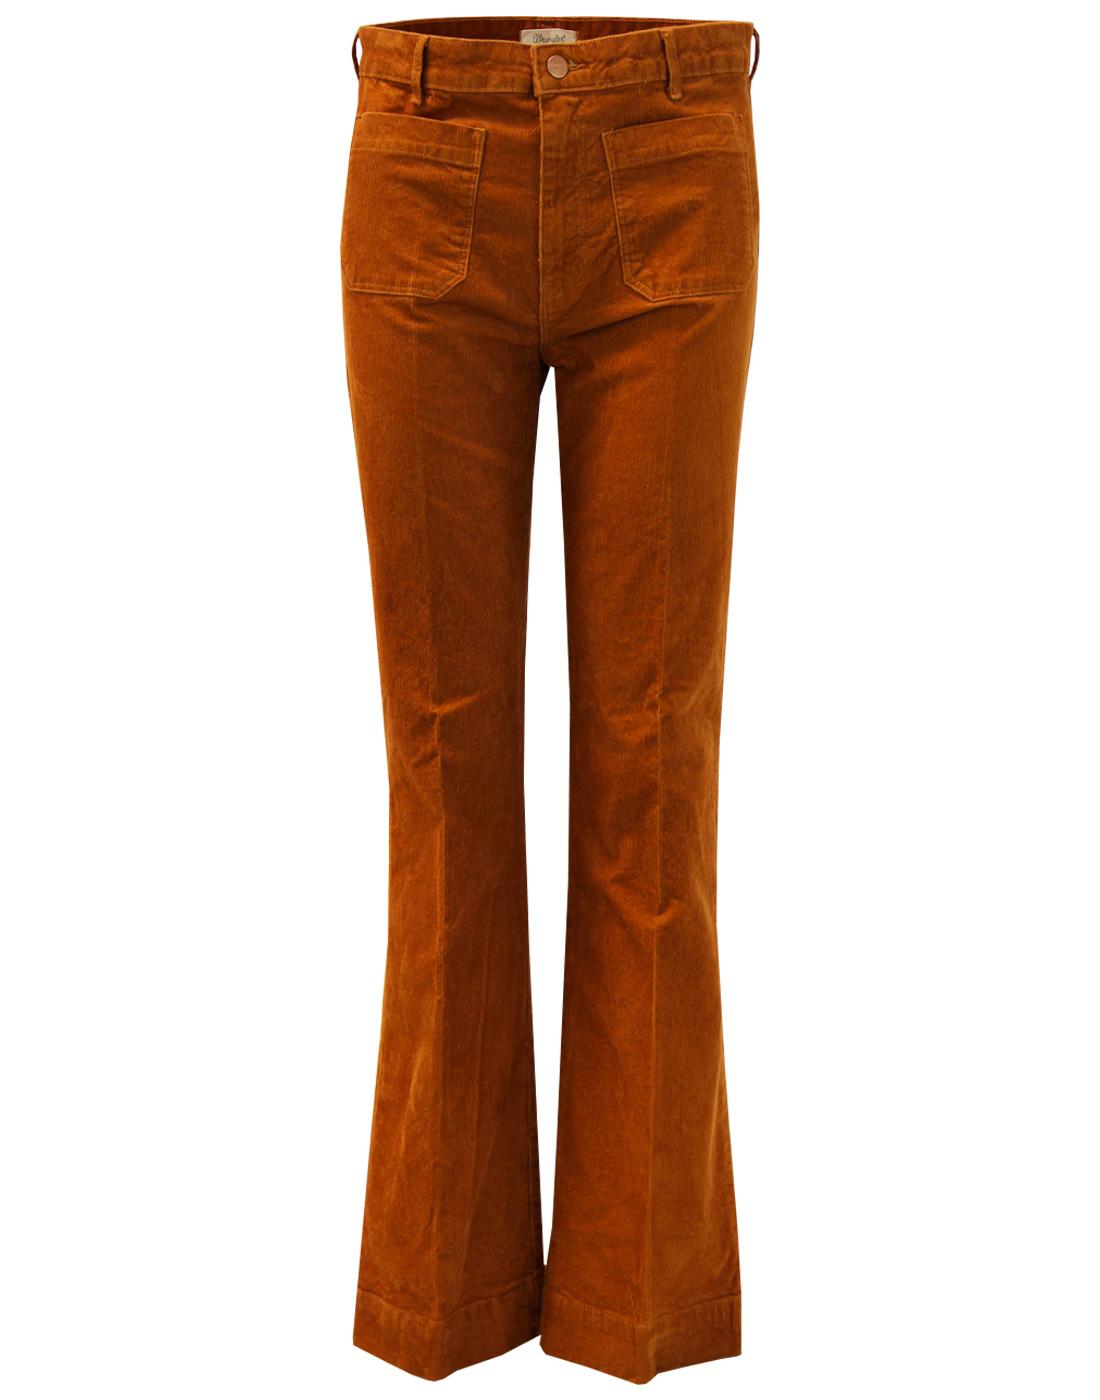 1970s corduroy pants, flare leg, vintage 70s pants, high waist